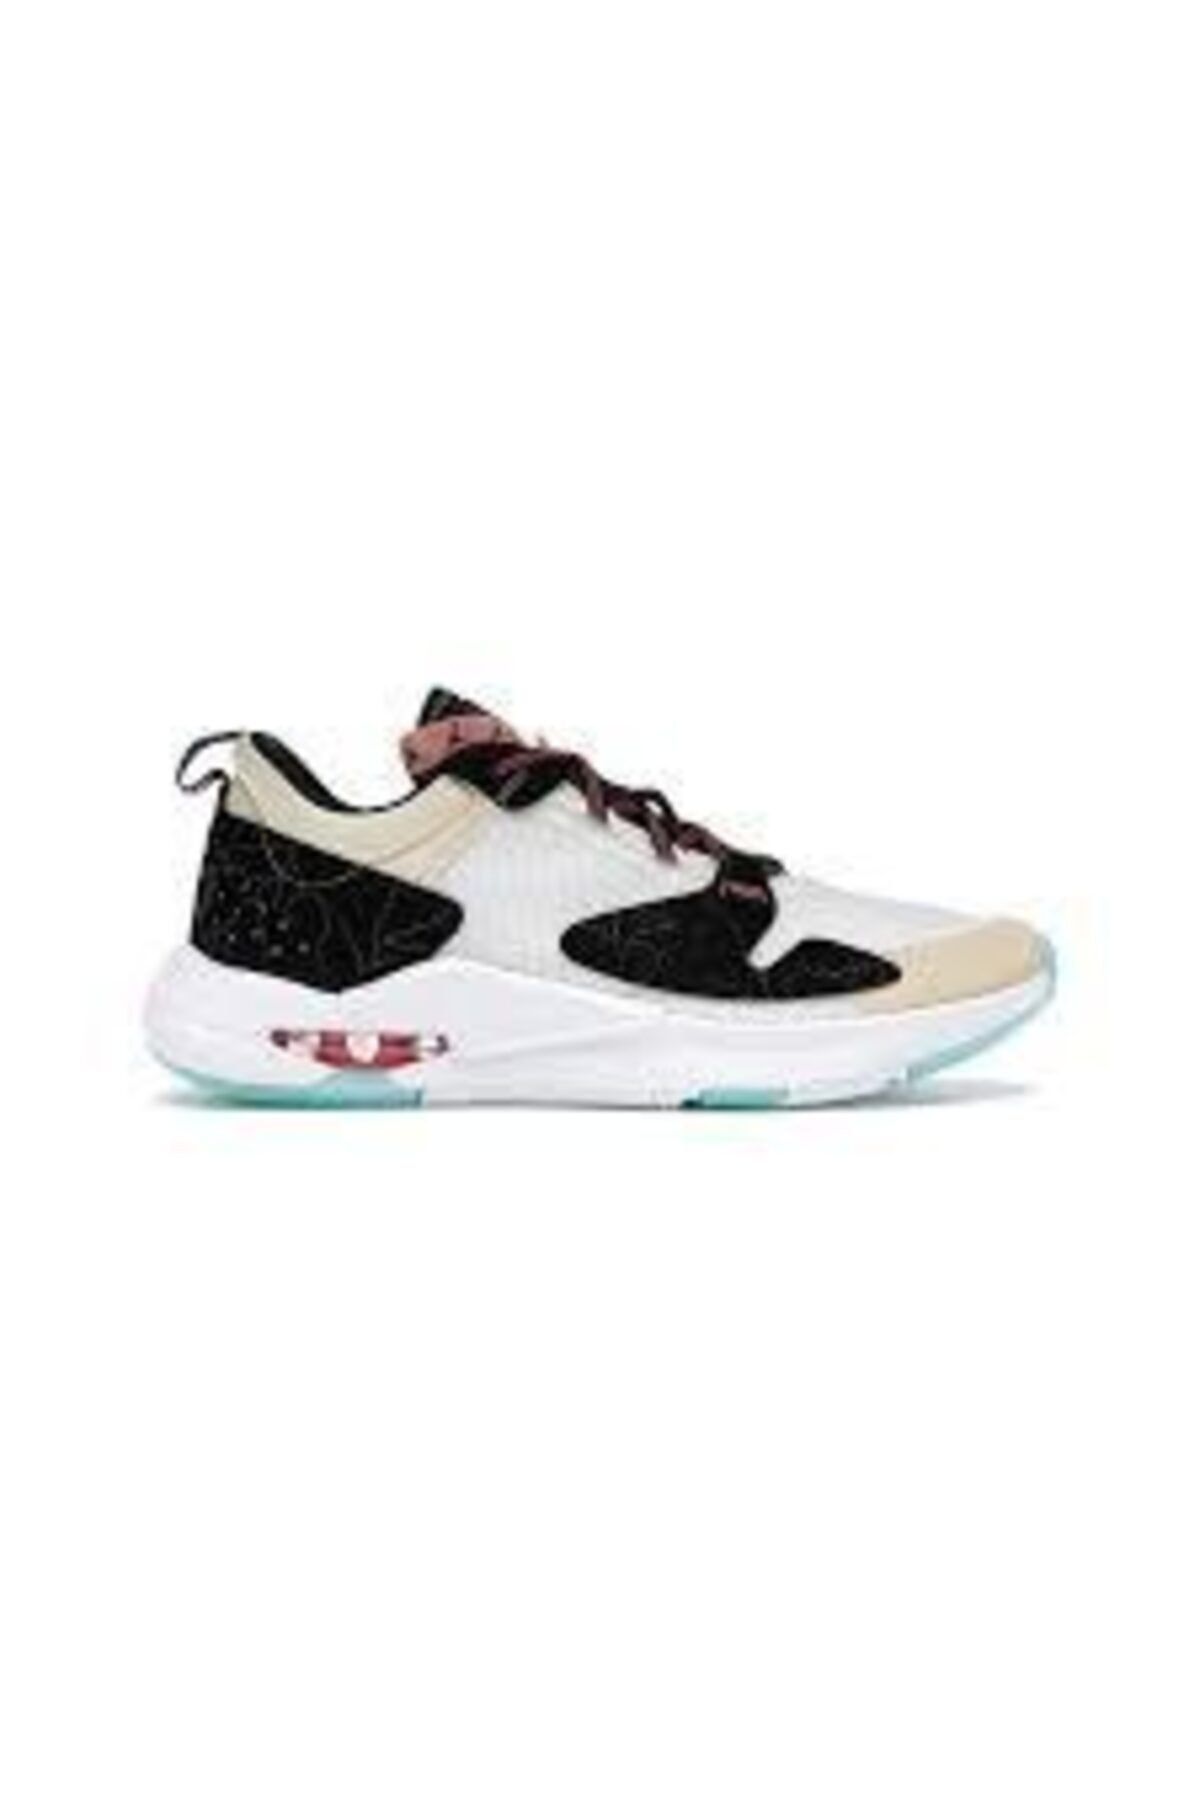 Nike Jordan Air Cadence Snc Basketbol Ayakkabısı Db2741-100